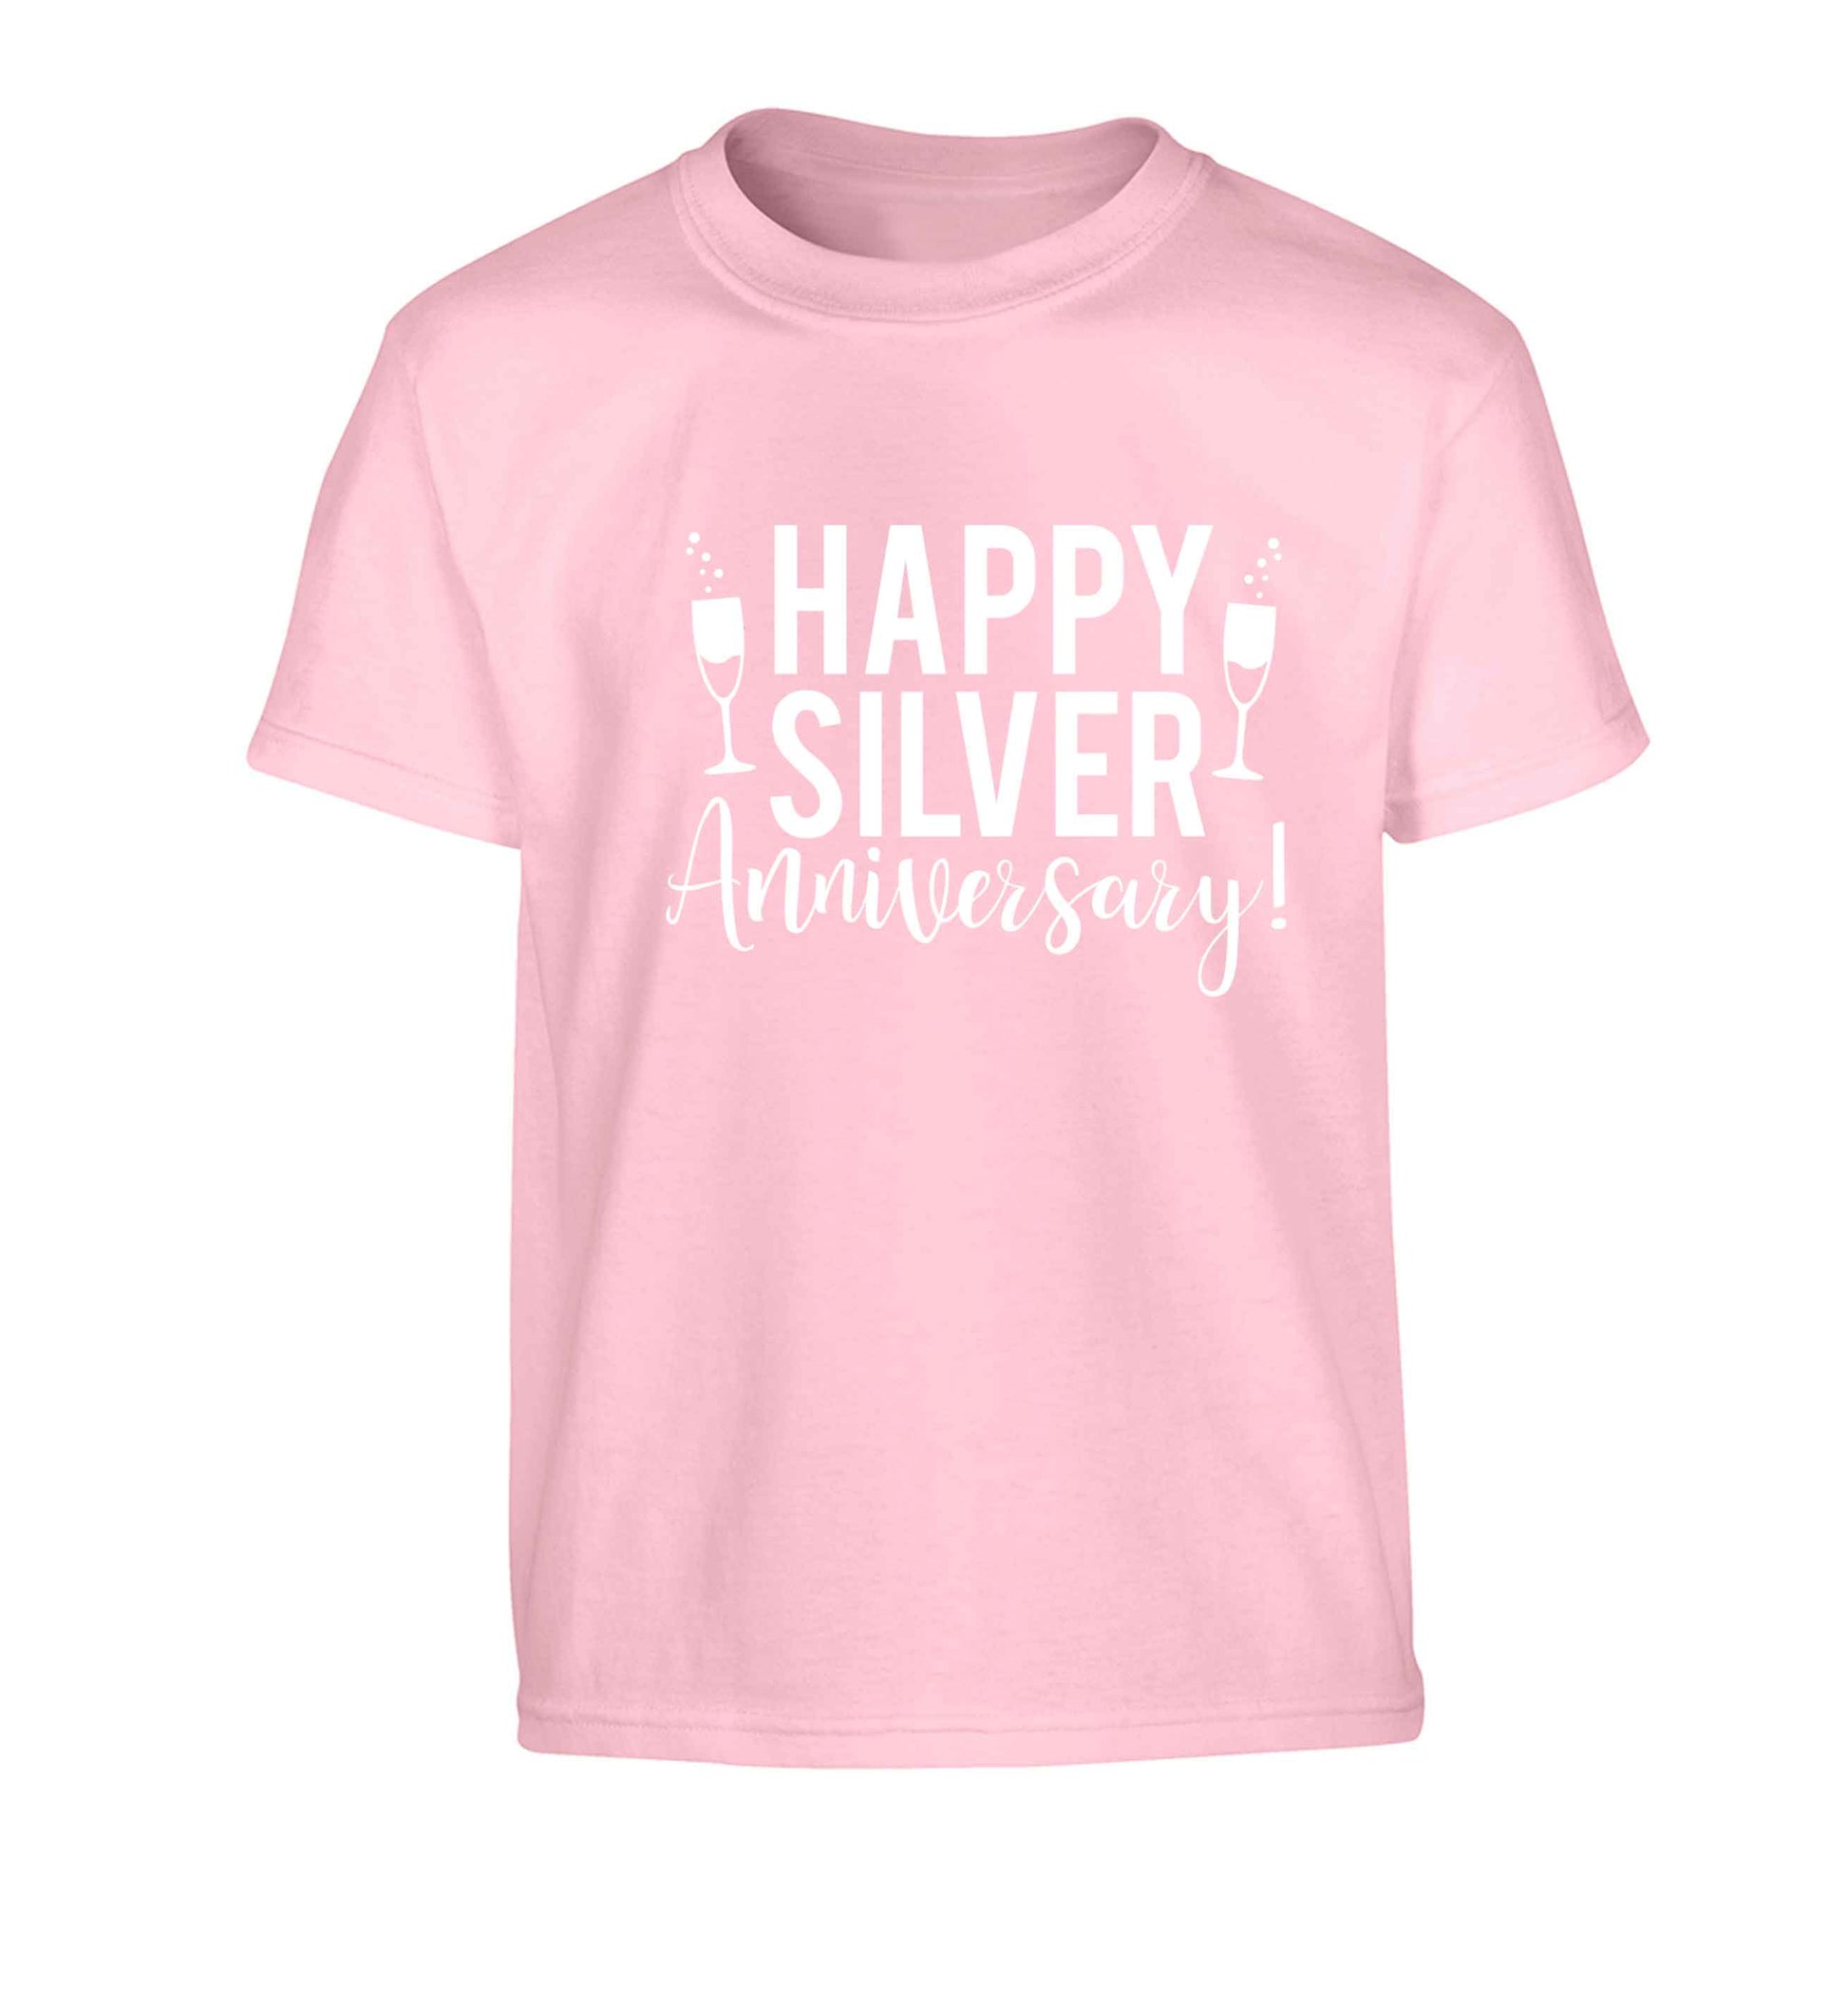 Happy silver anniversary! Children's light pink Tshirt 12-13 Years